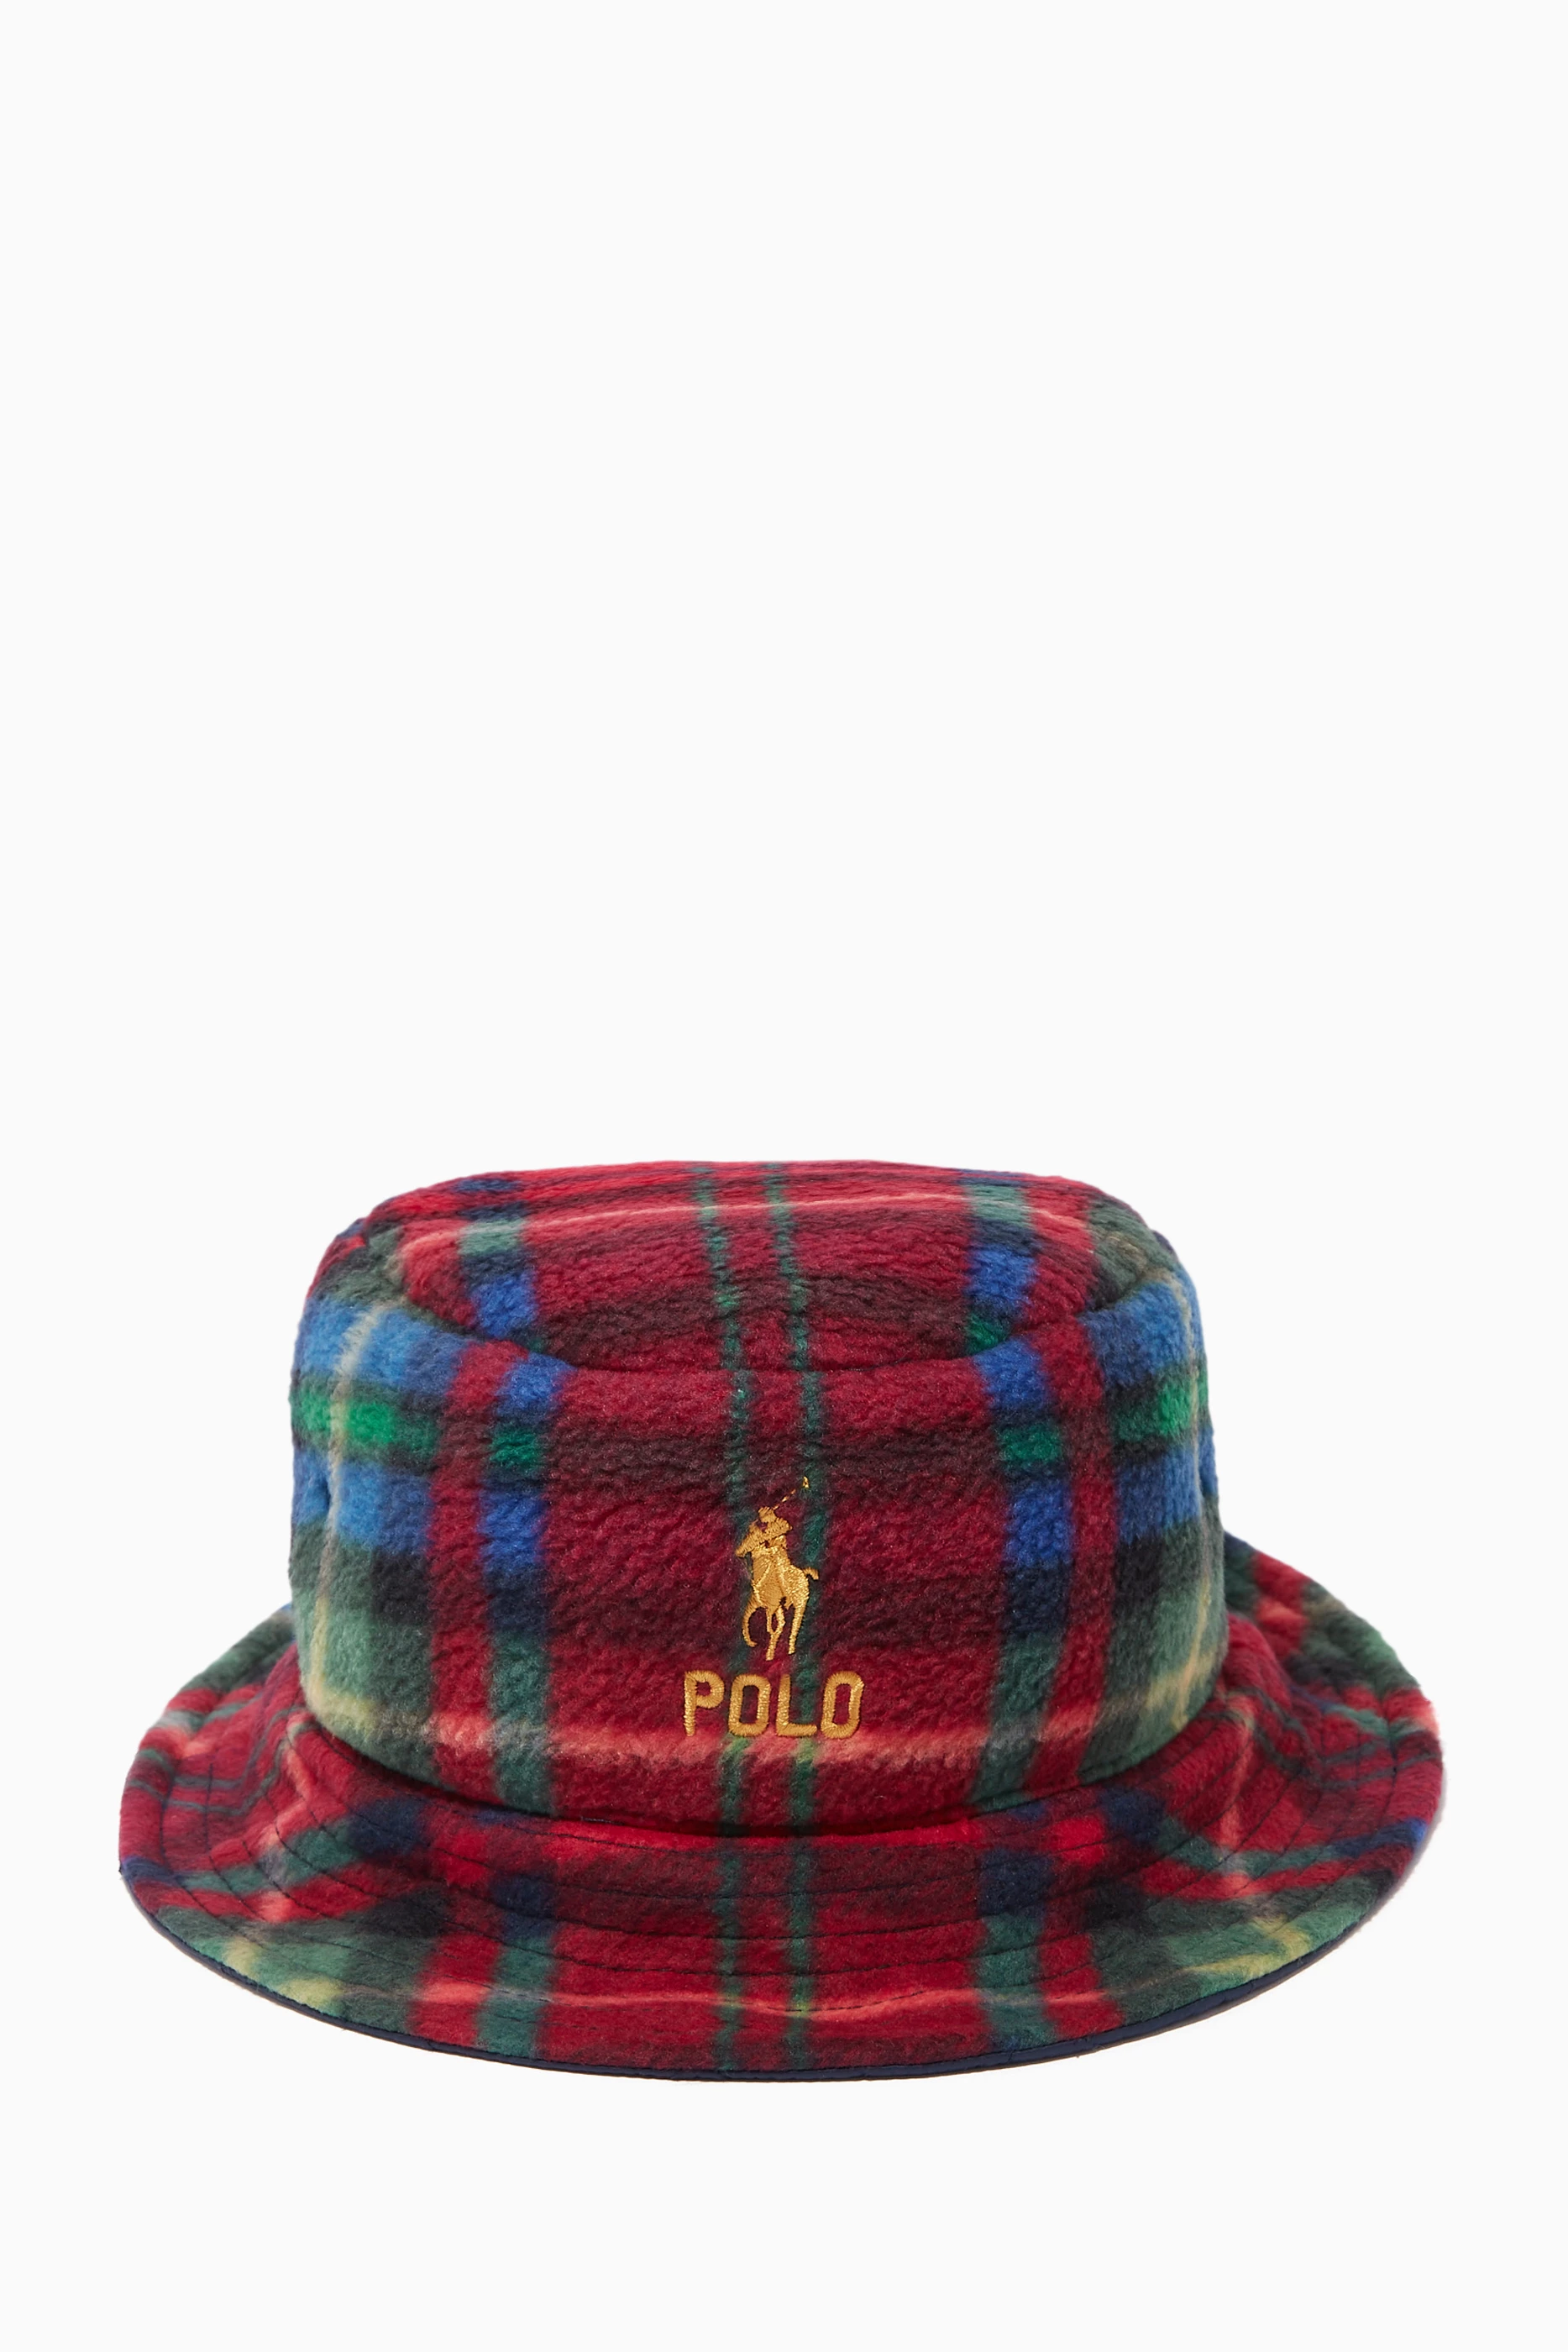 Shop Polo Ralph Lauren Black Bucket Hat in Plaid Teddy for MEN | Ounass Oman